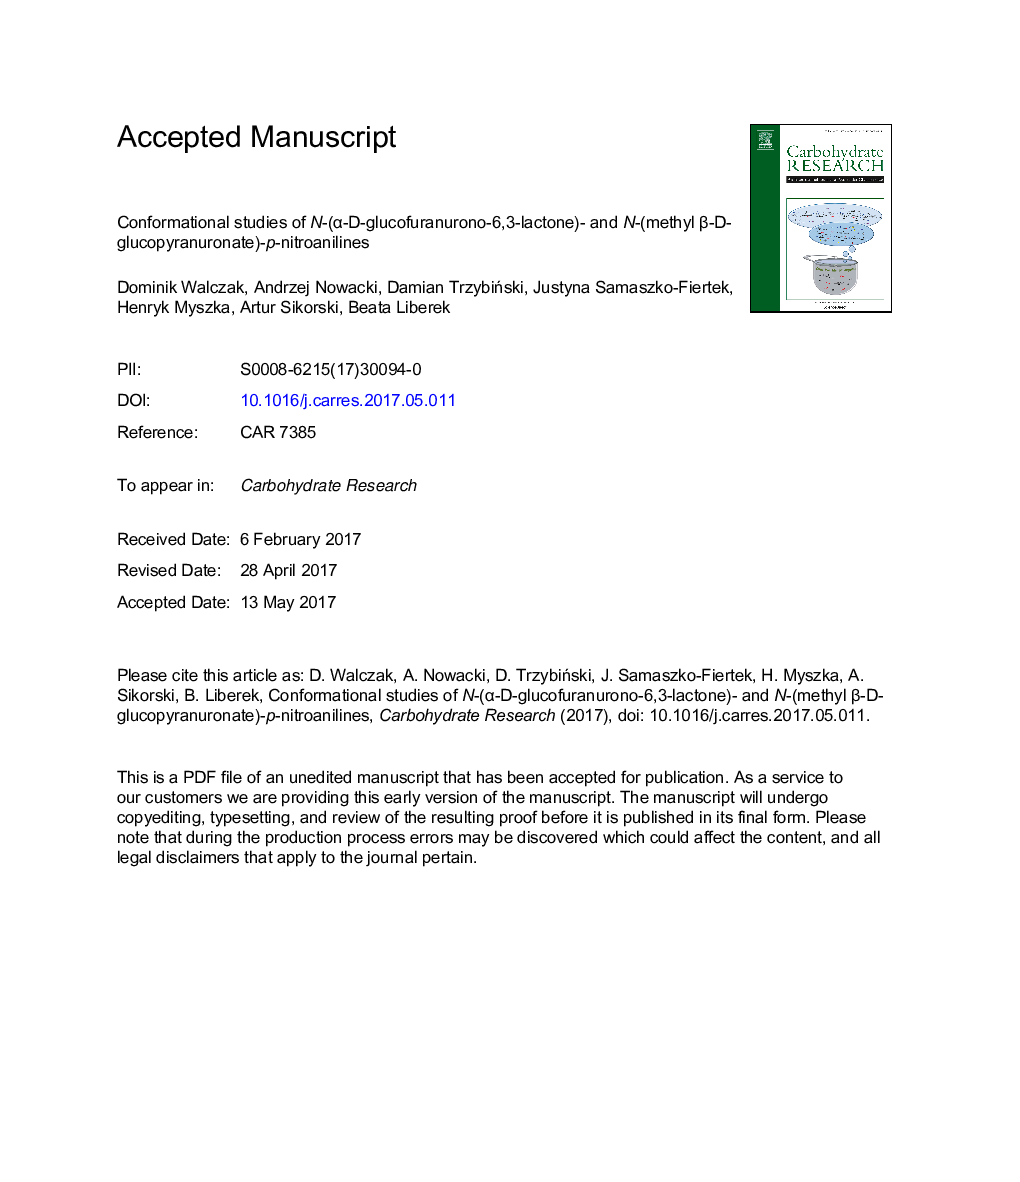 Conformational studies of N-(Î±-d-glucofuranurono-6,3-lactone)- and N-(methyl Î²-d-glucopyranuronate)-p-nitroanilines